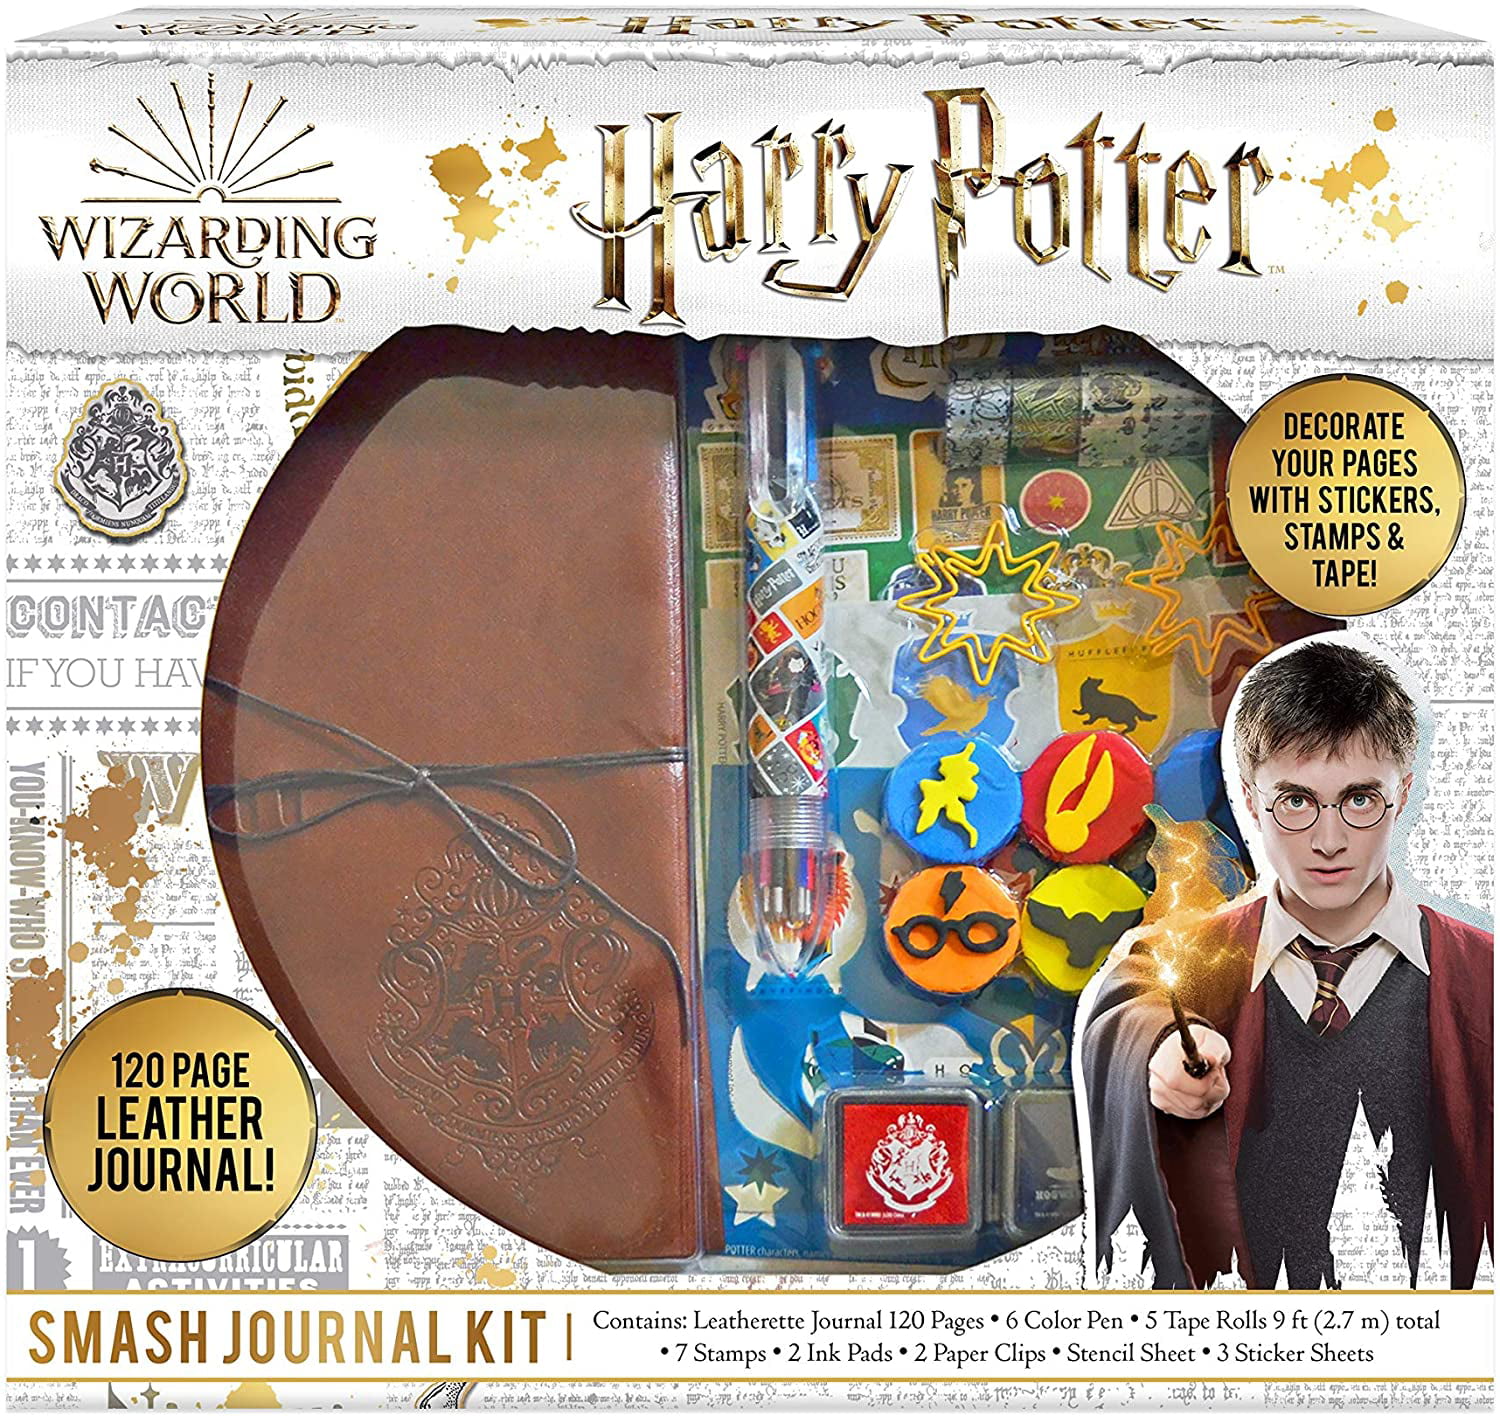 Wizarding World Harry Potter 200 Page Smash Journal Kit